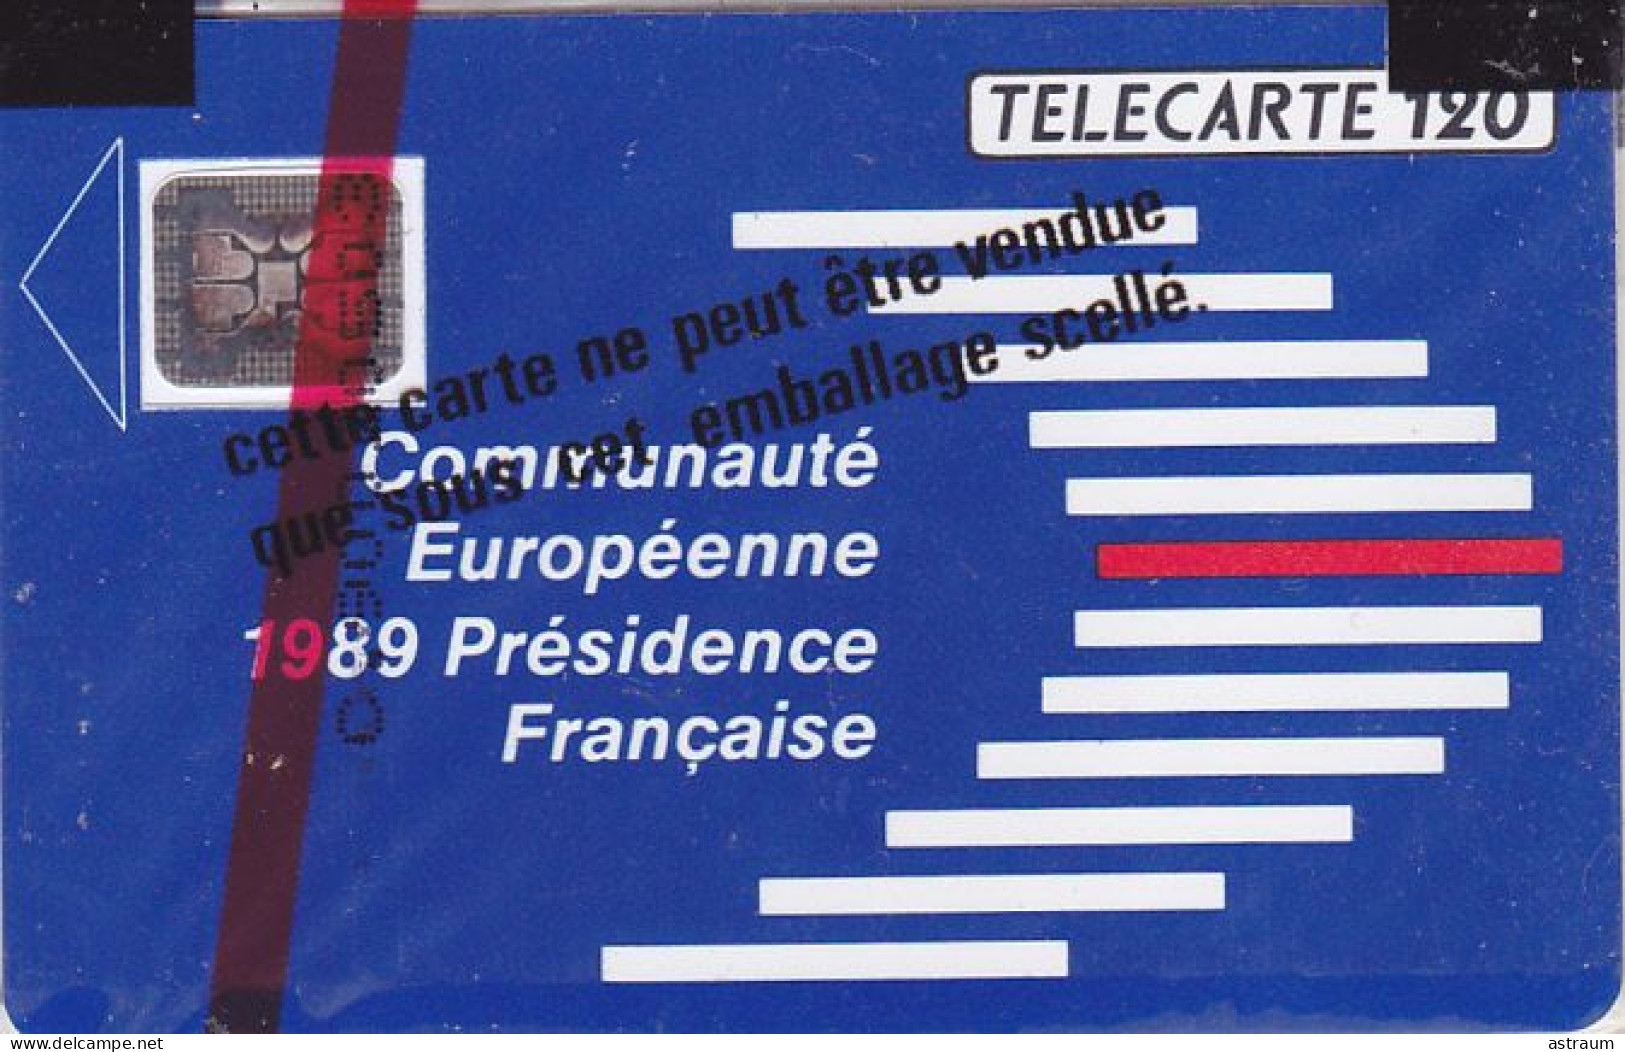 Telecarte Publique F108b NSB - Communauté Europeenne - 120 U - Sc5an - 1989 - 1989